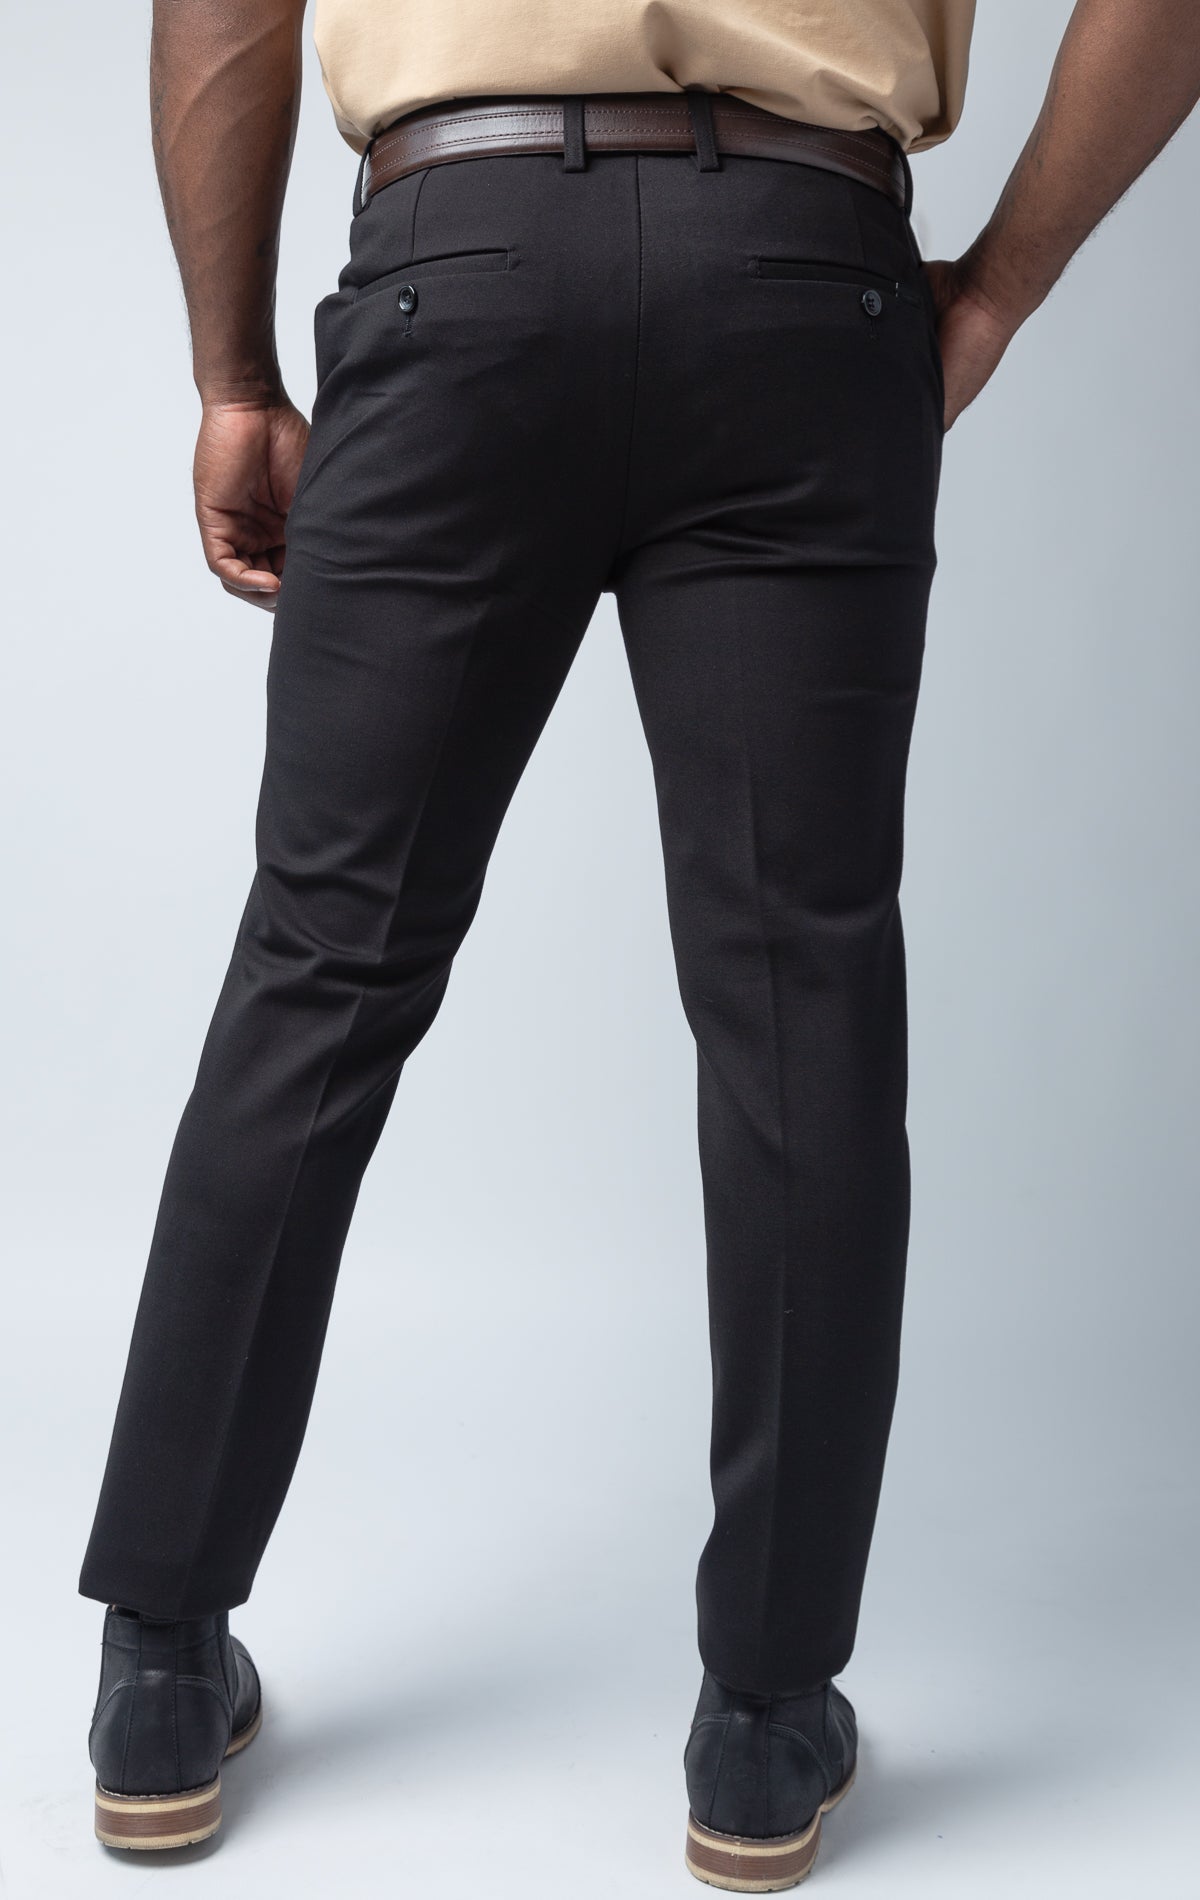 Black Dress pants with elastic waistband technology.